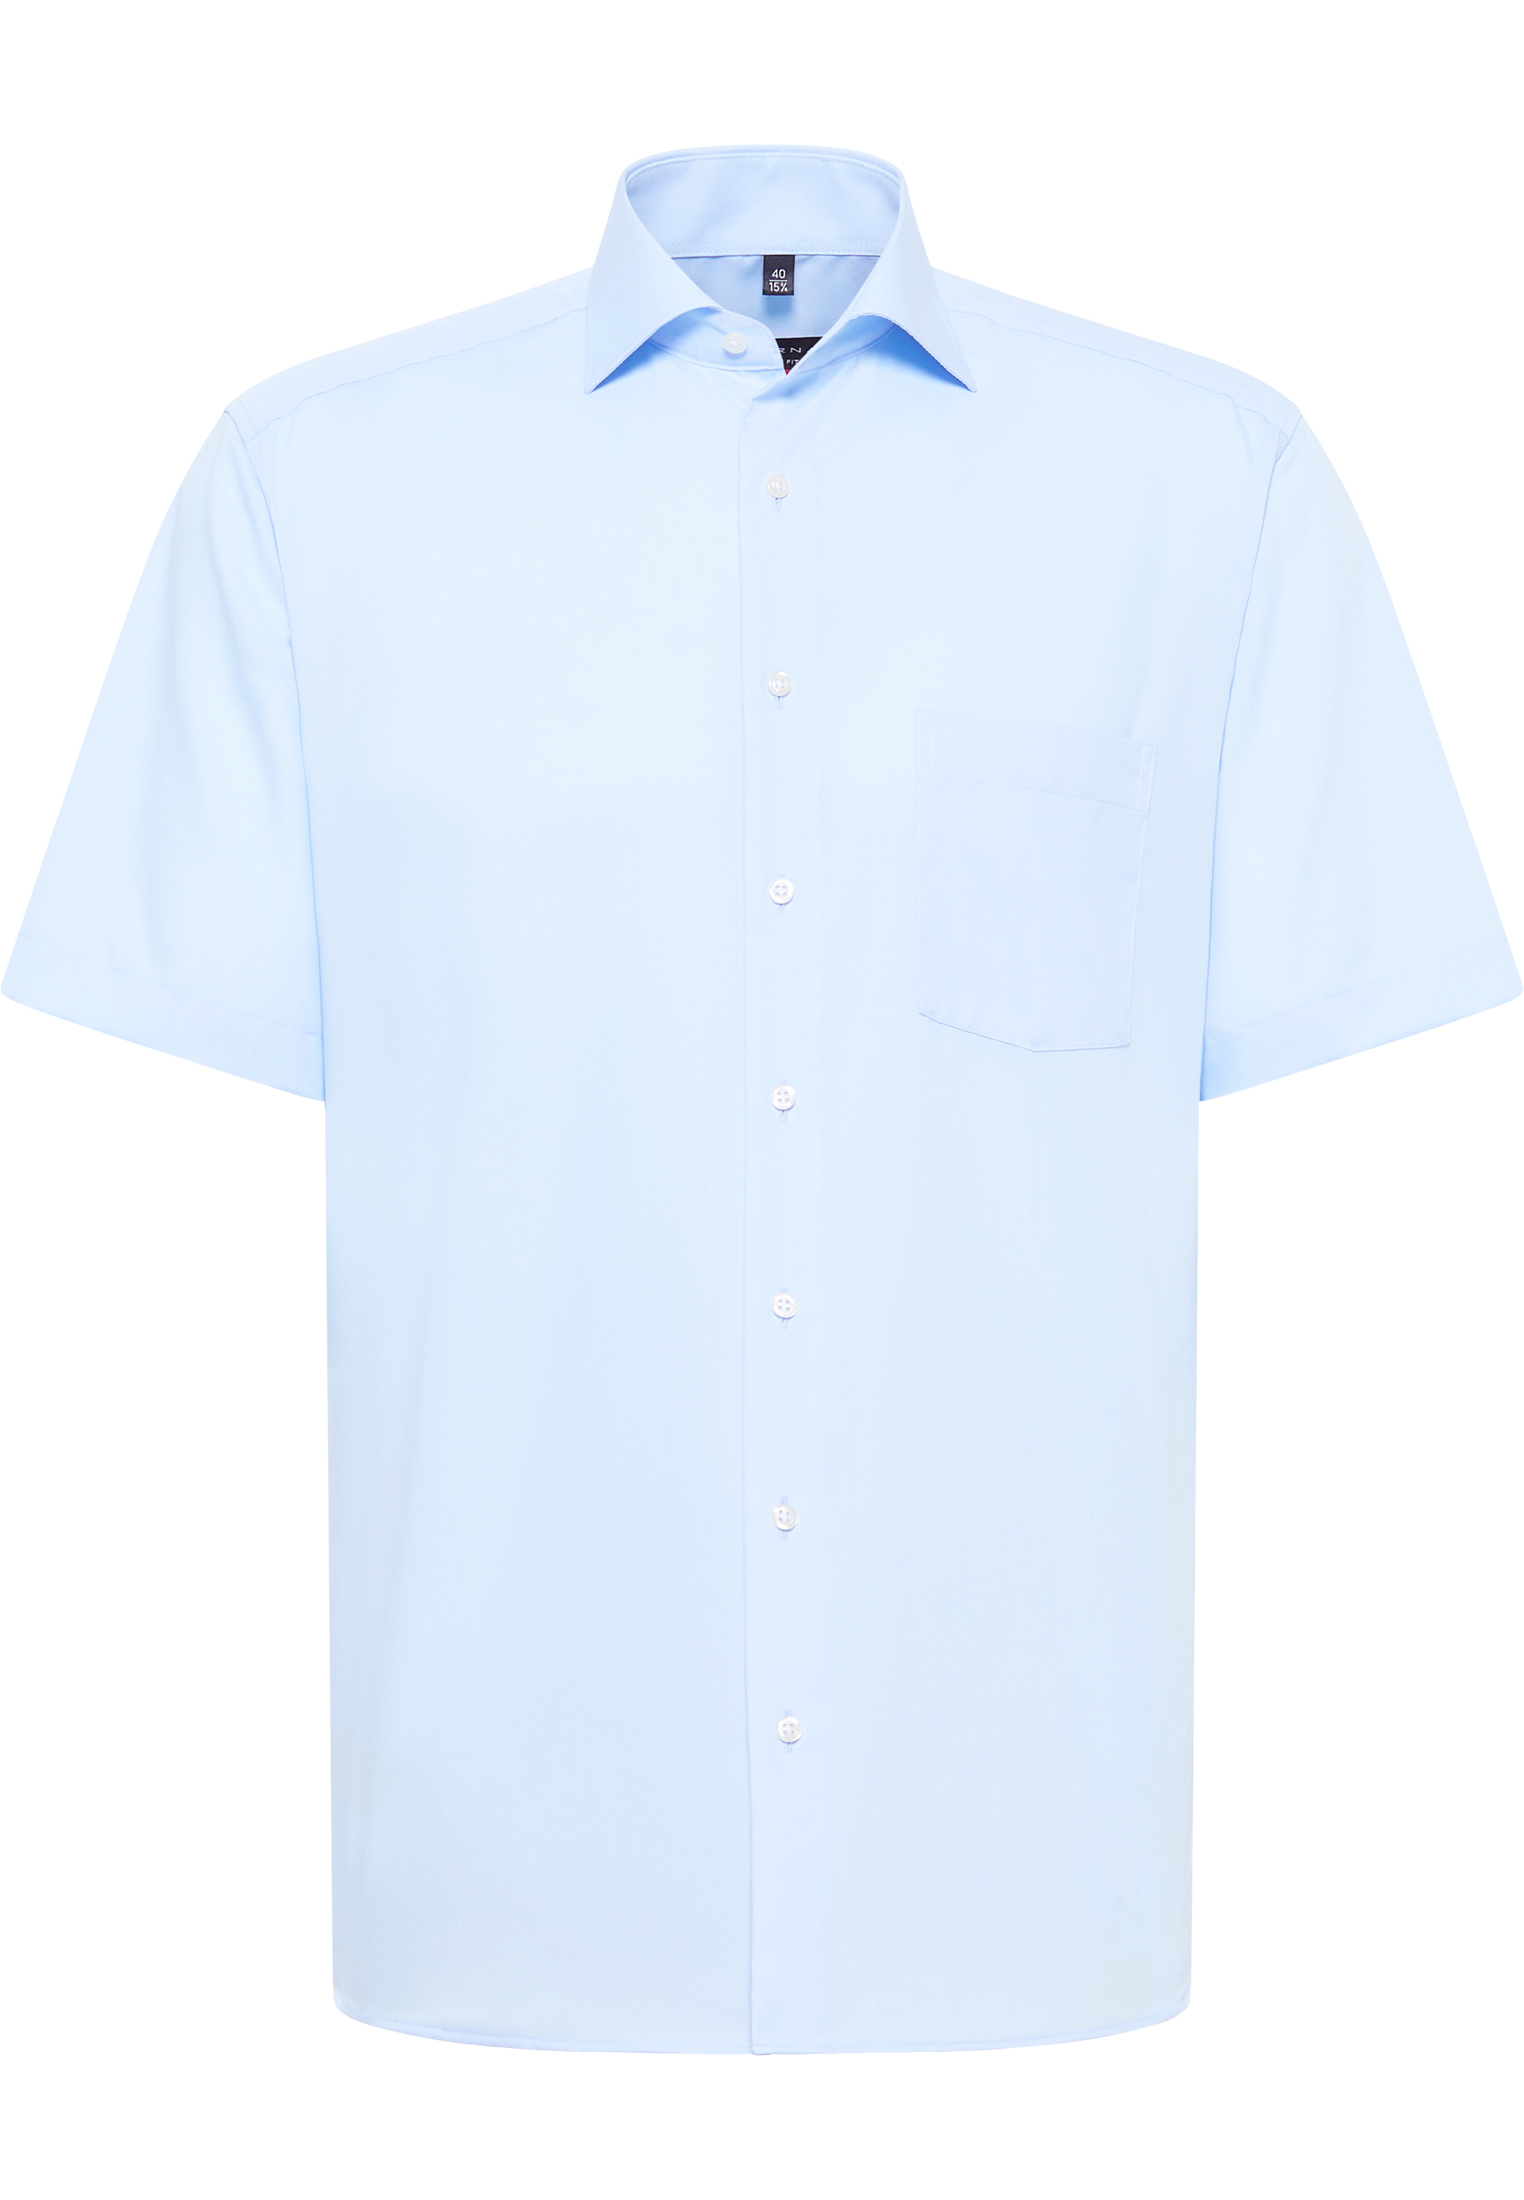 ETERNA poplin short-sleeved shirt MODERN FIT